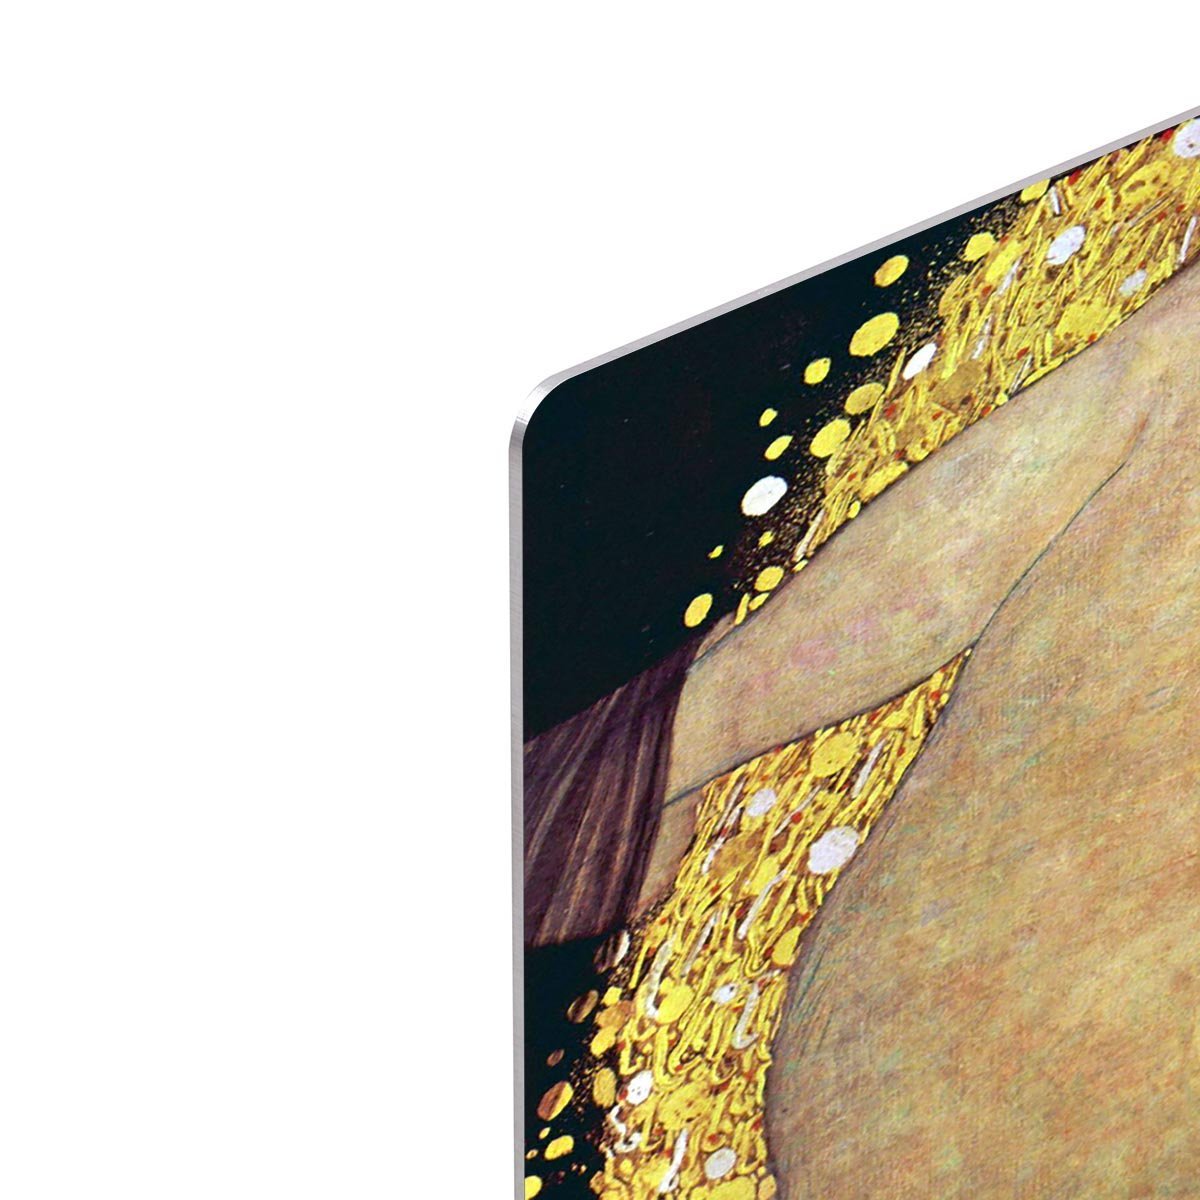 Danae by Klimt HD Metal Print